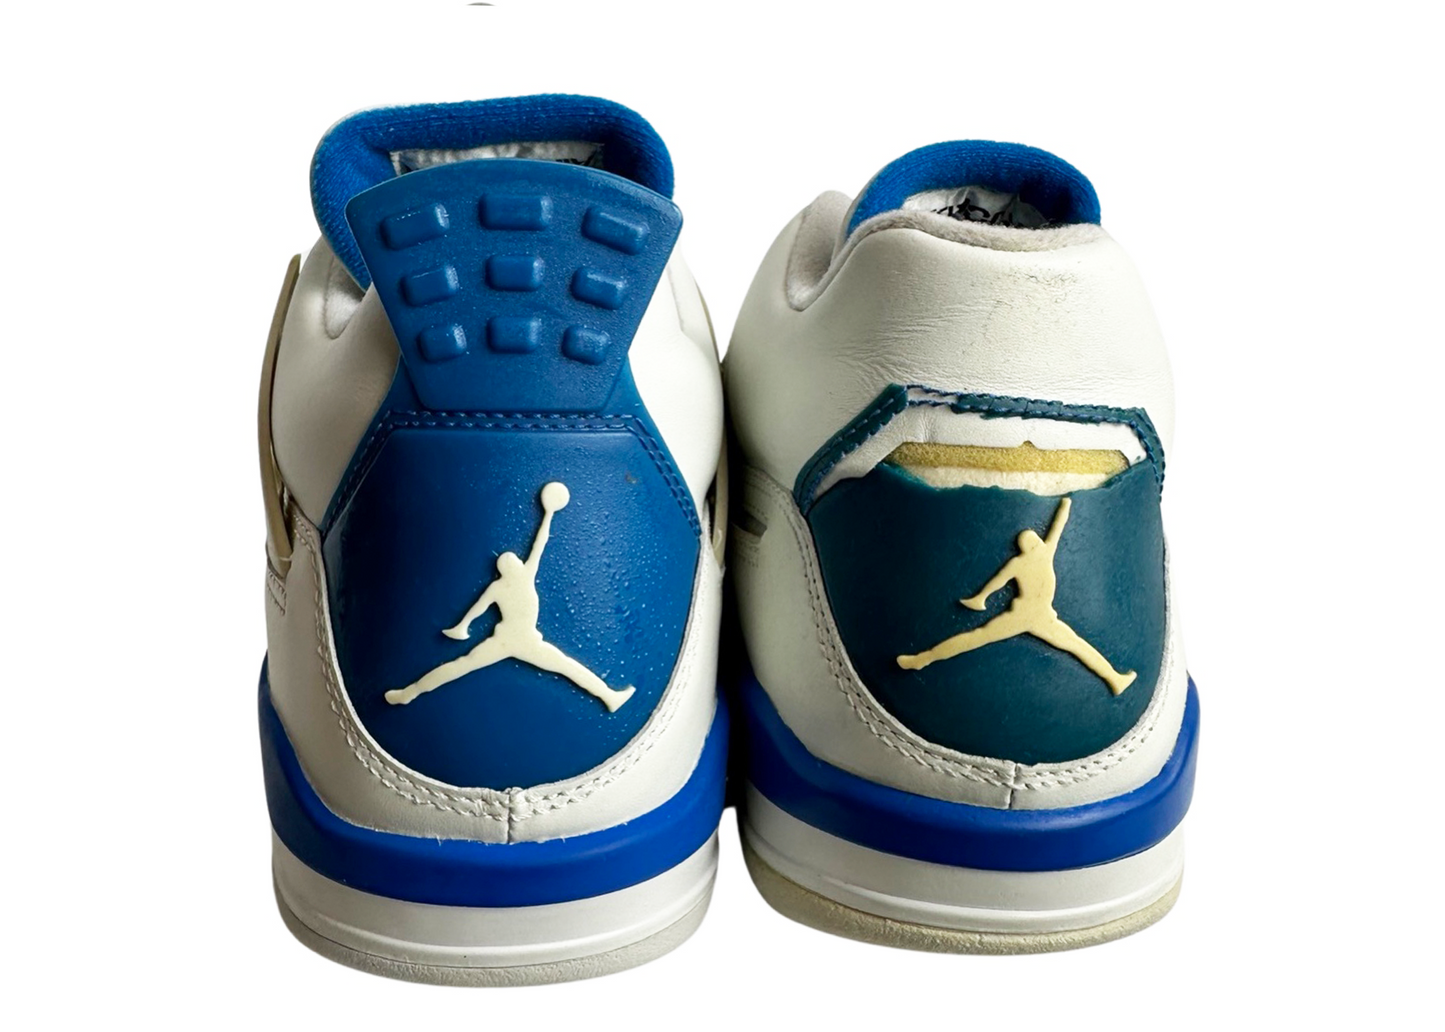 Jordan 4 Retro Military Blue (2006)